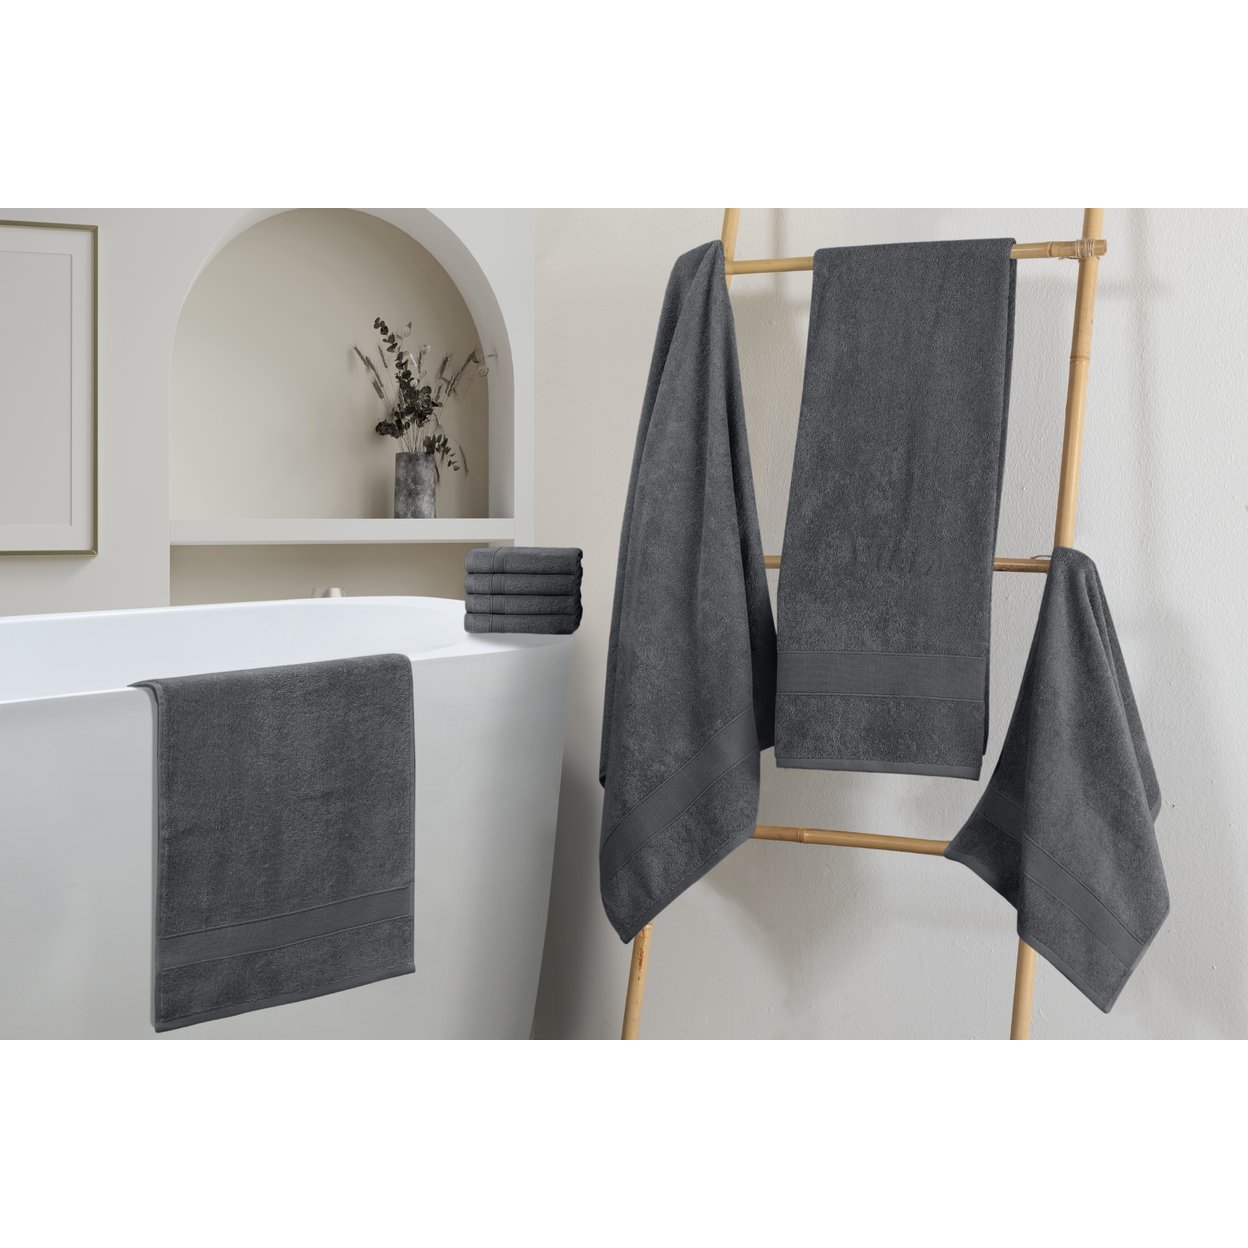 Chic Home Premium 8-Piece 100% Pure Turkish Cotton Towel Set, Woven Dobby Border Design, OEKO-TEX Standard 100 Certified - Charcoal